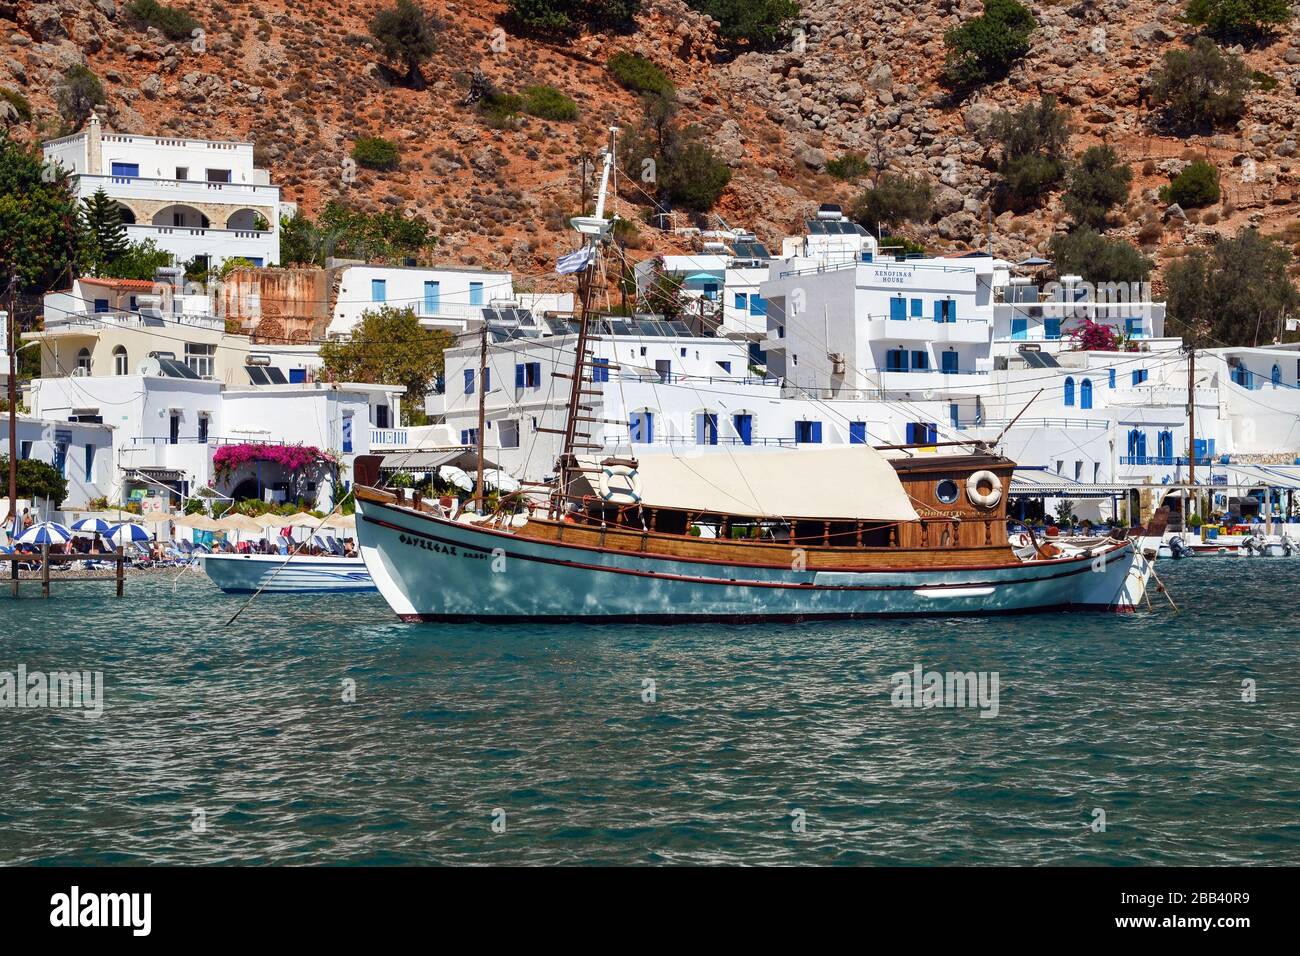 LOUTRO, CRETE (GREECE) - SEPTEMBER 19, 2013: Beautiful sailboat docked in Loutro, island of Crete, Greece. Stock Photo